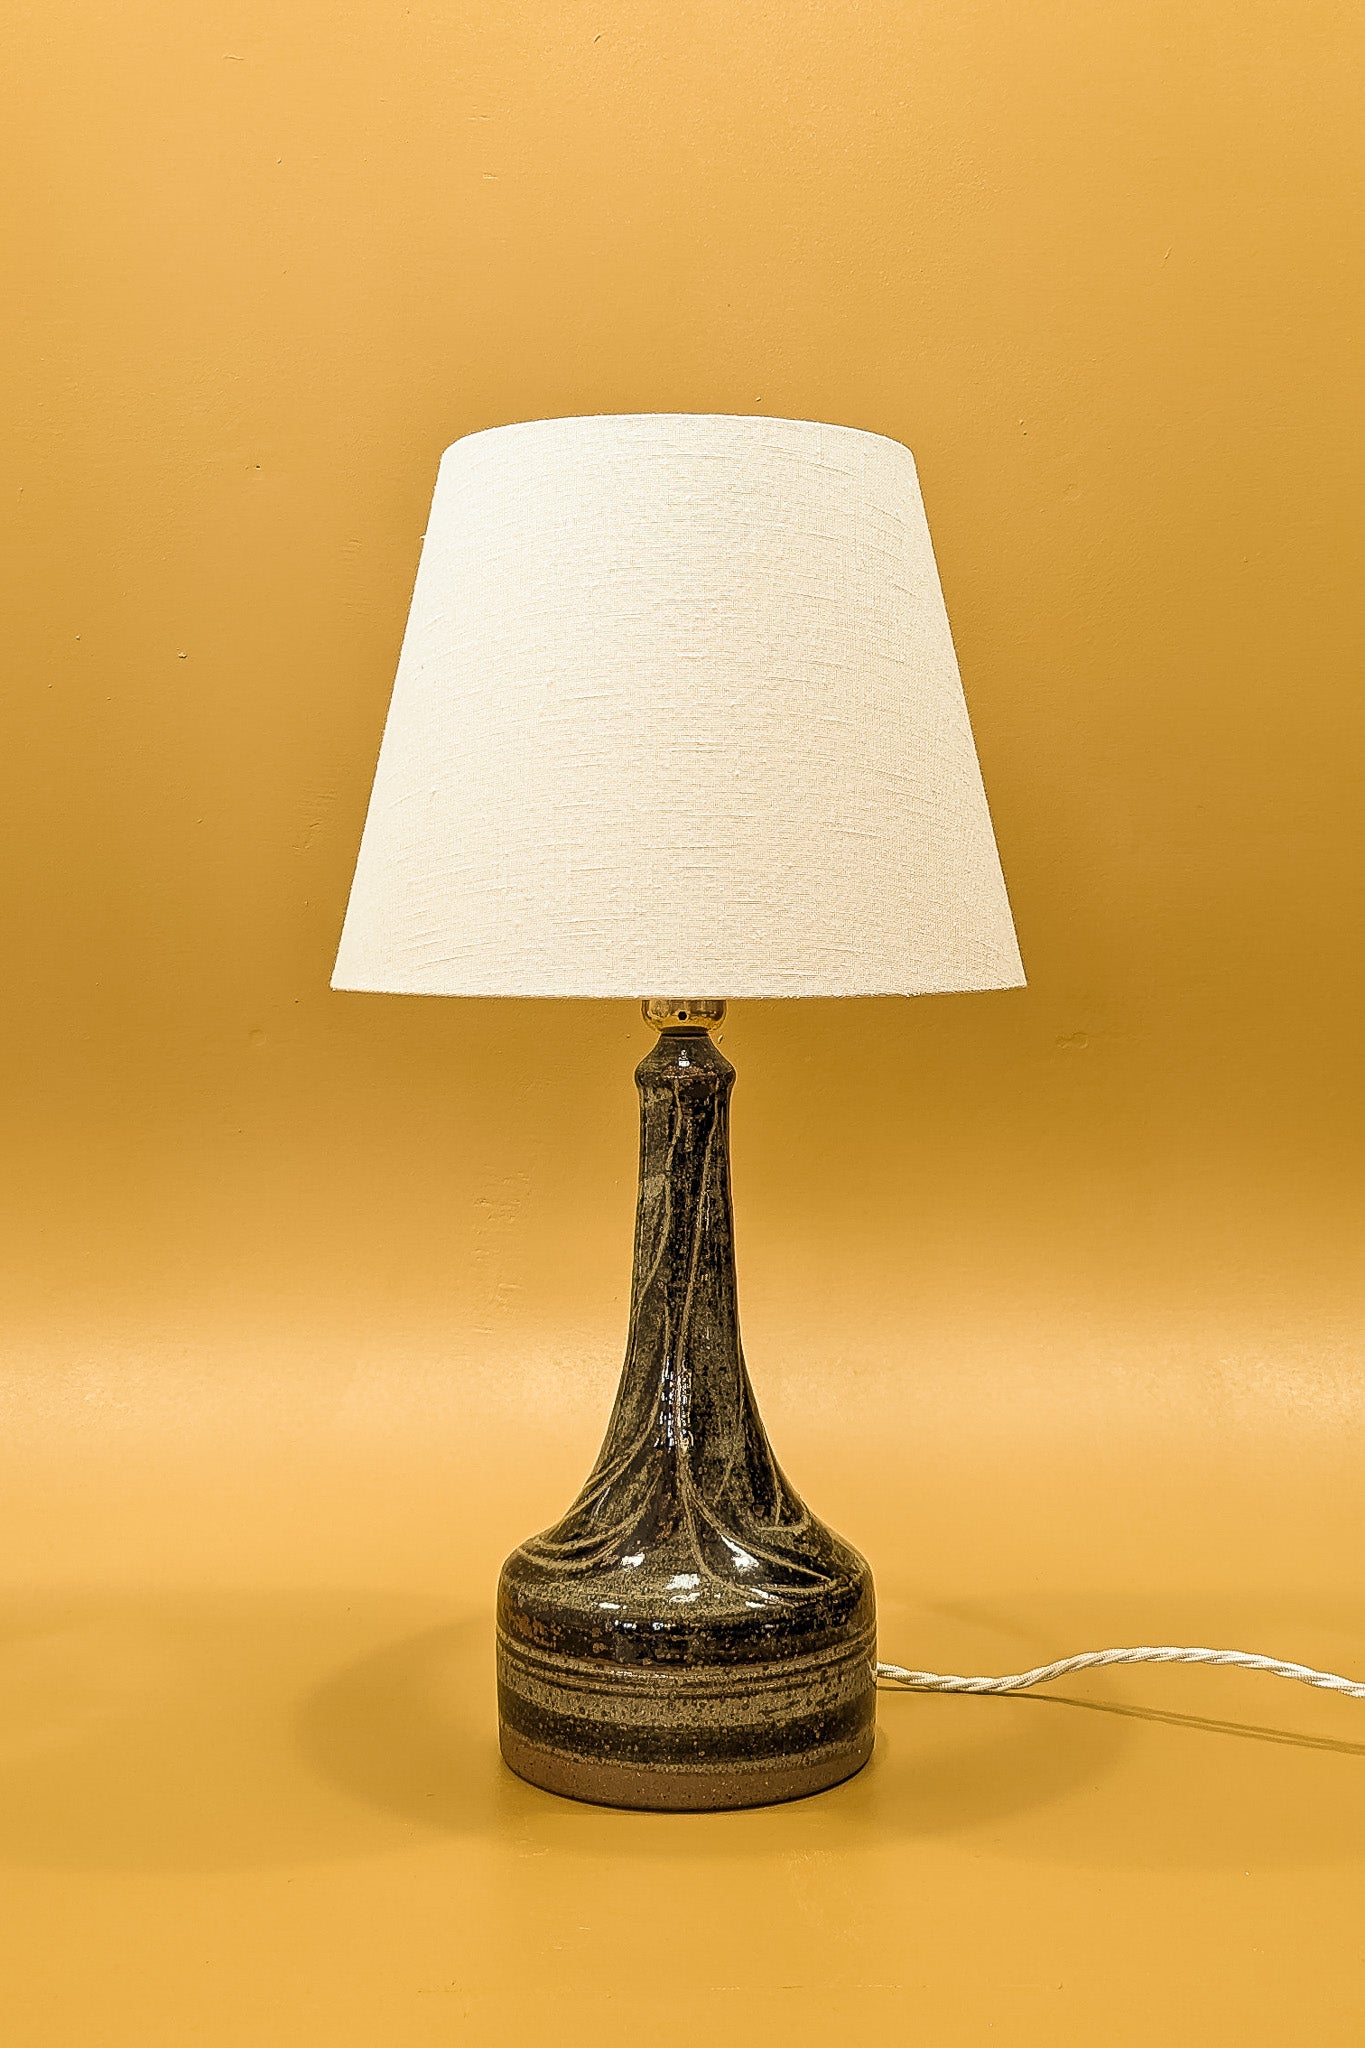 Ceramic table lamps